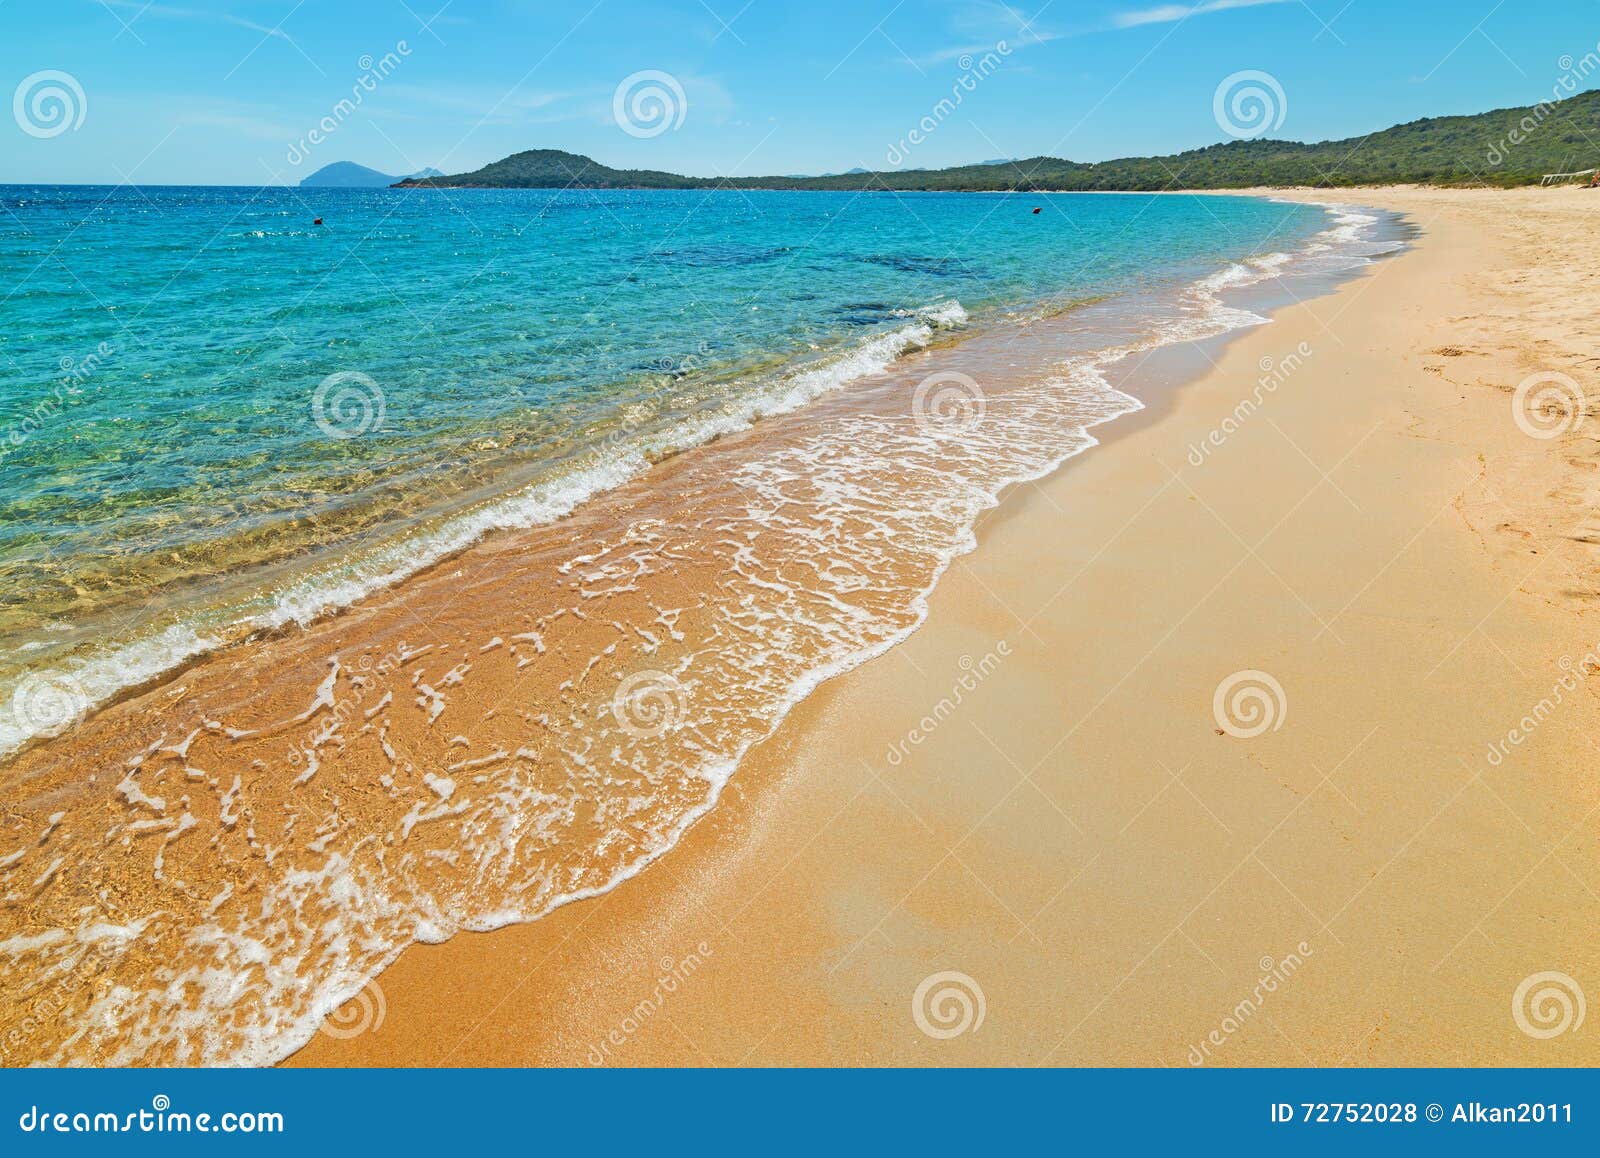 golden shore in liscia ruja beach